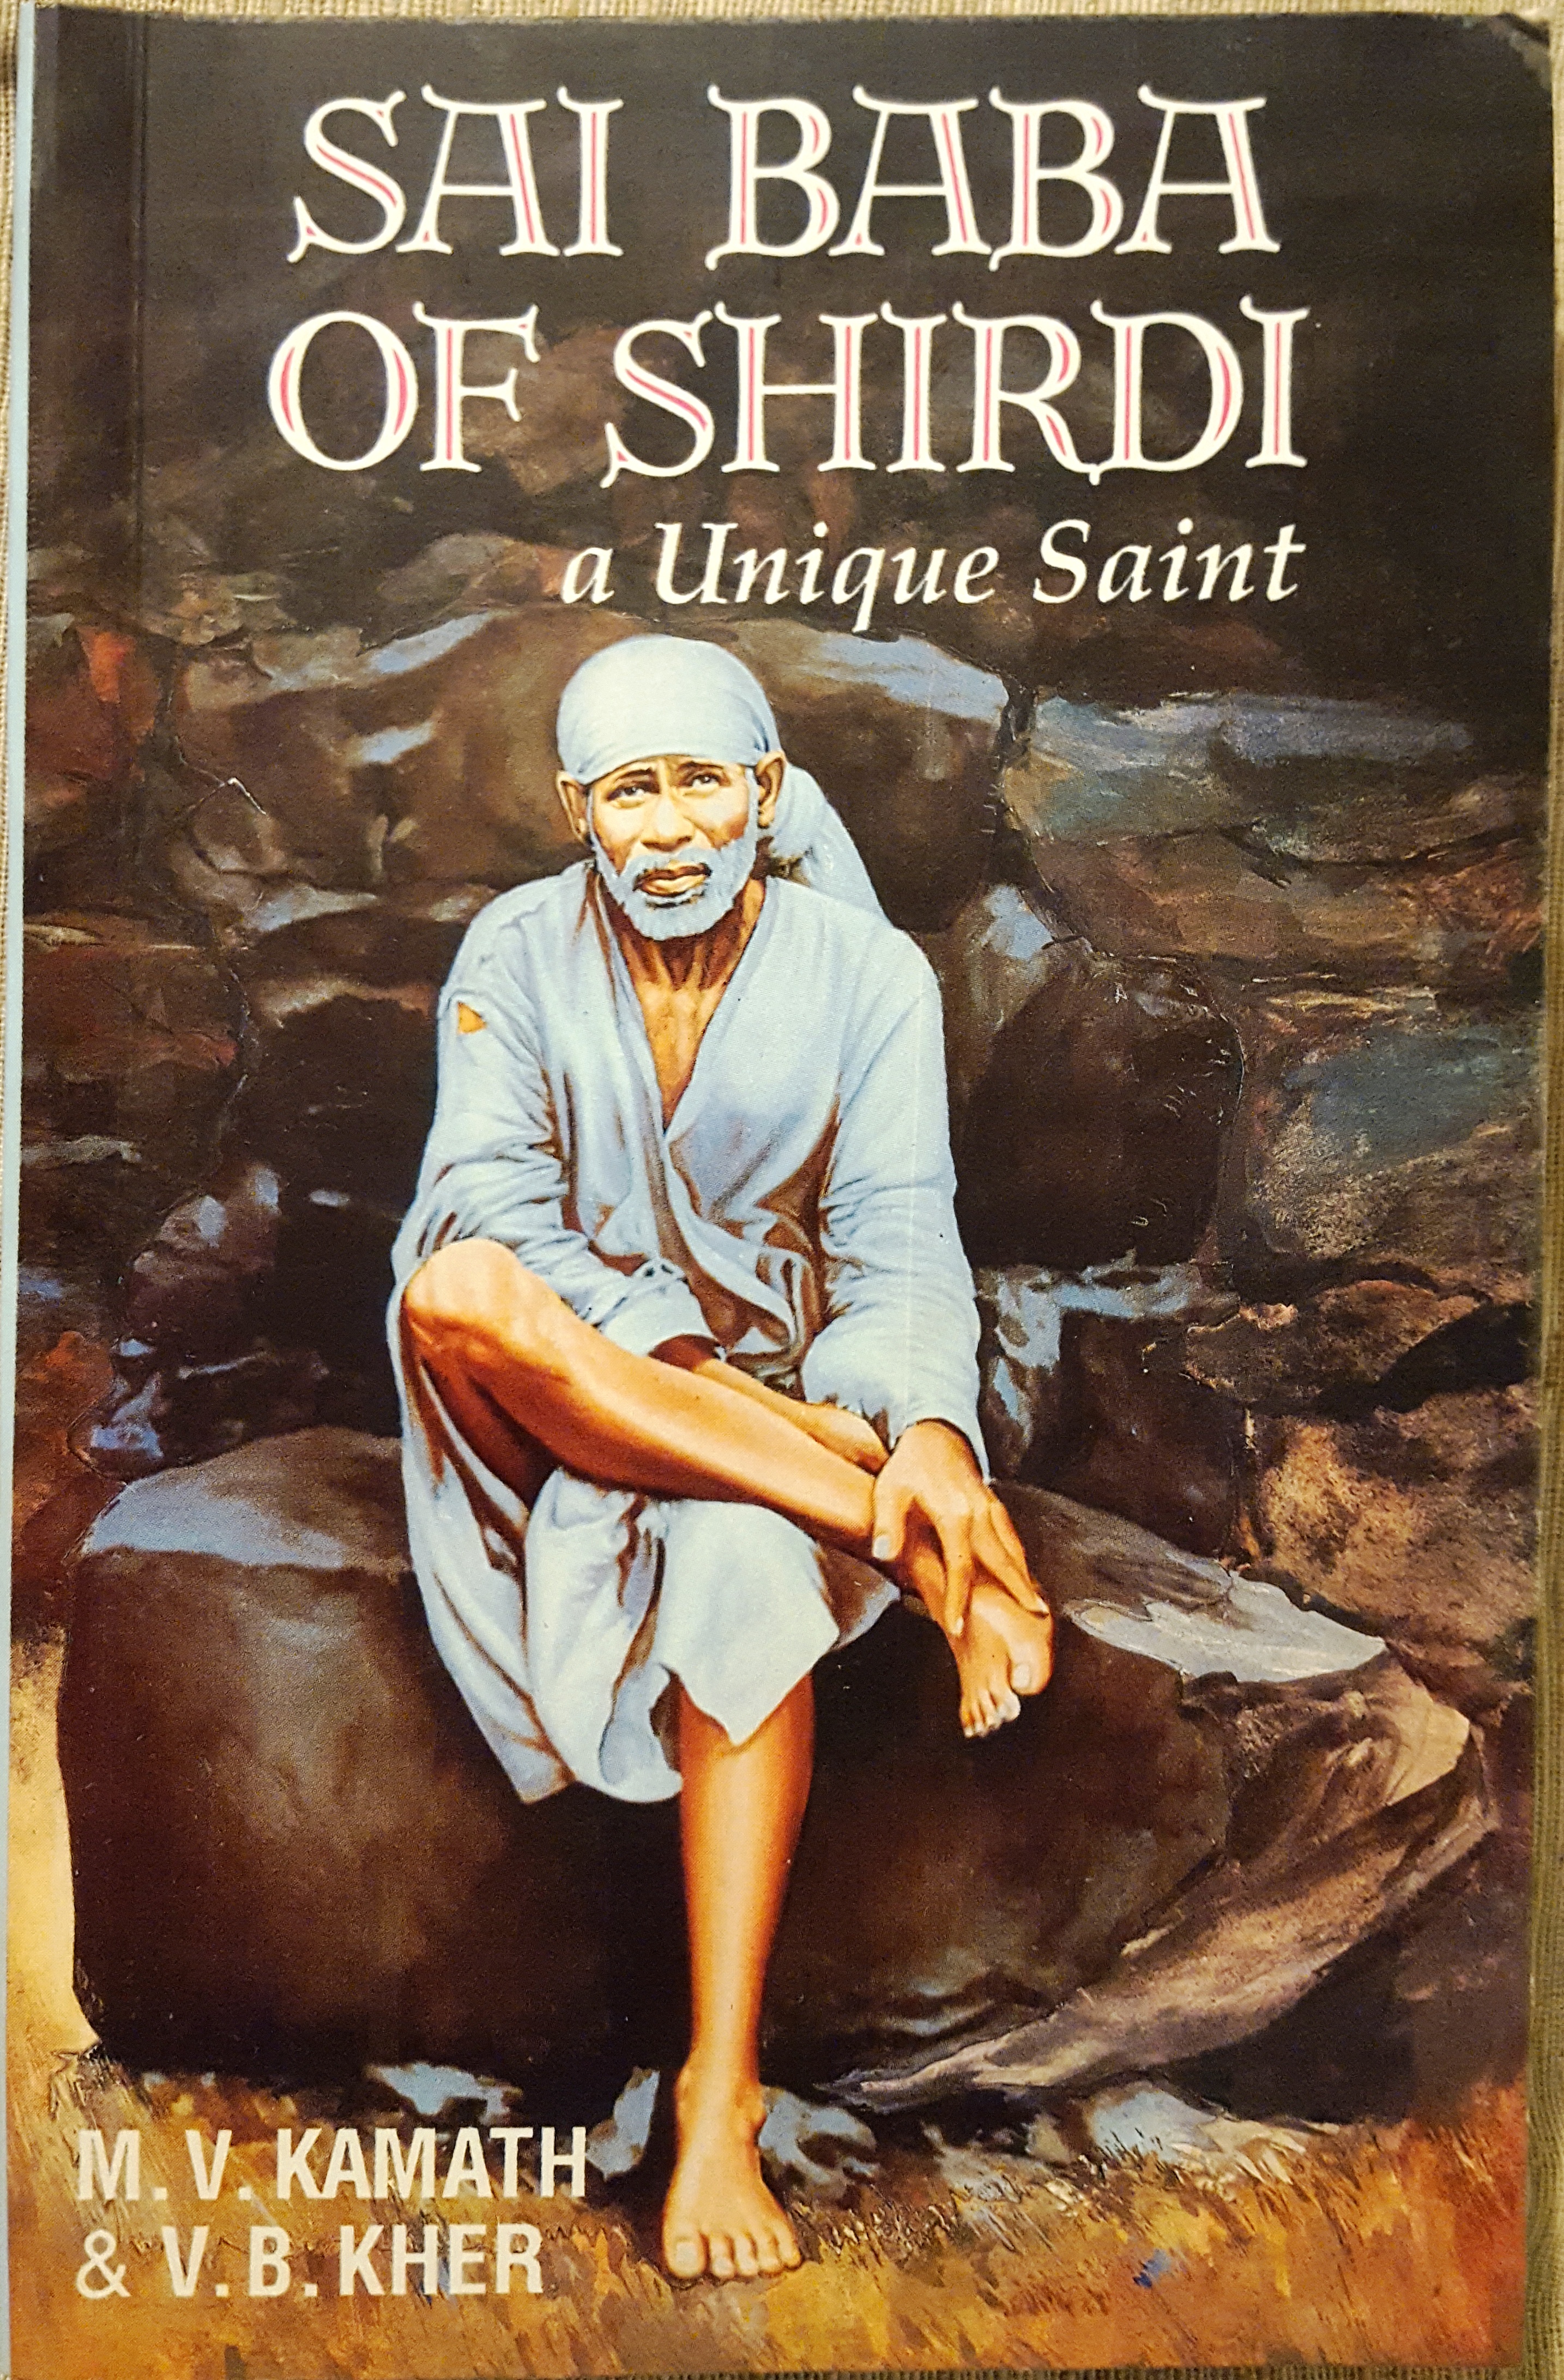 Shirdi Sai Baba Temple Frankfurt Germany (Deutschland) recommended book - Sai Baba Of Shirdi - a Unique Saint .